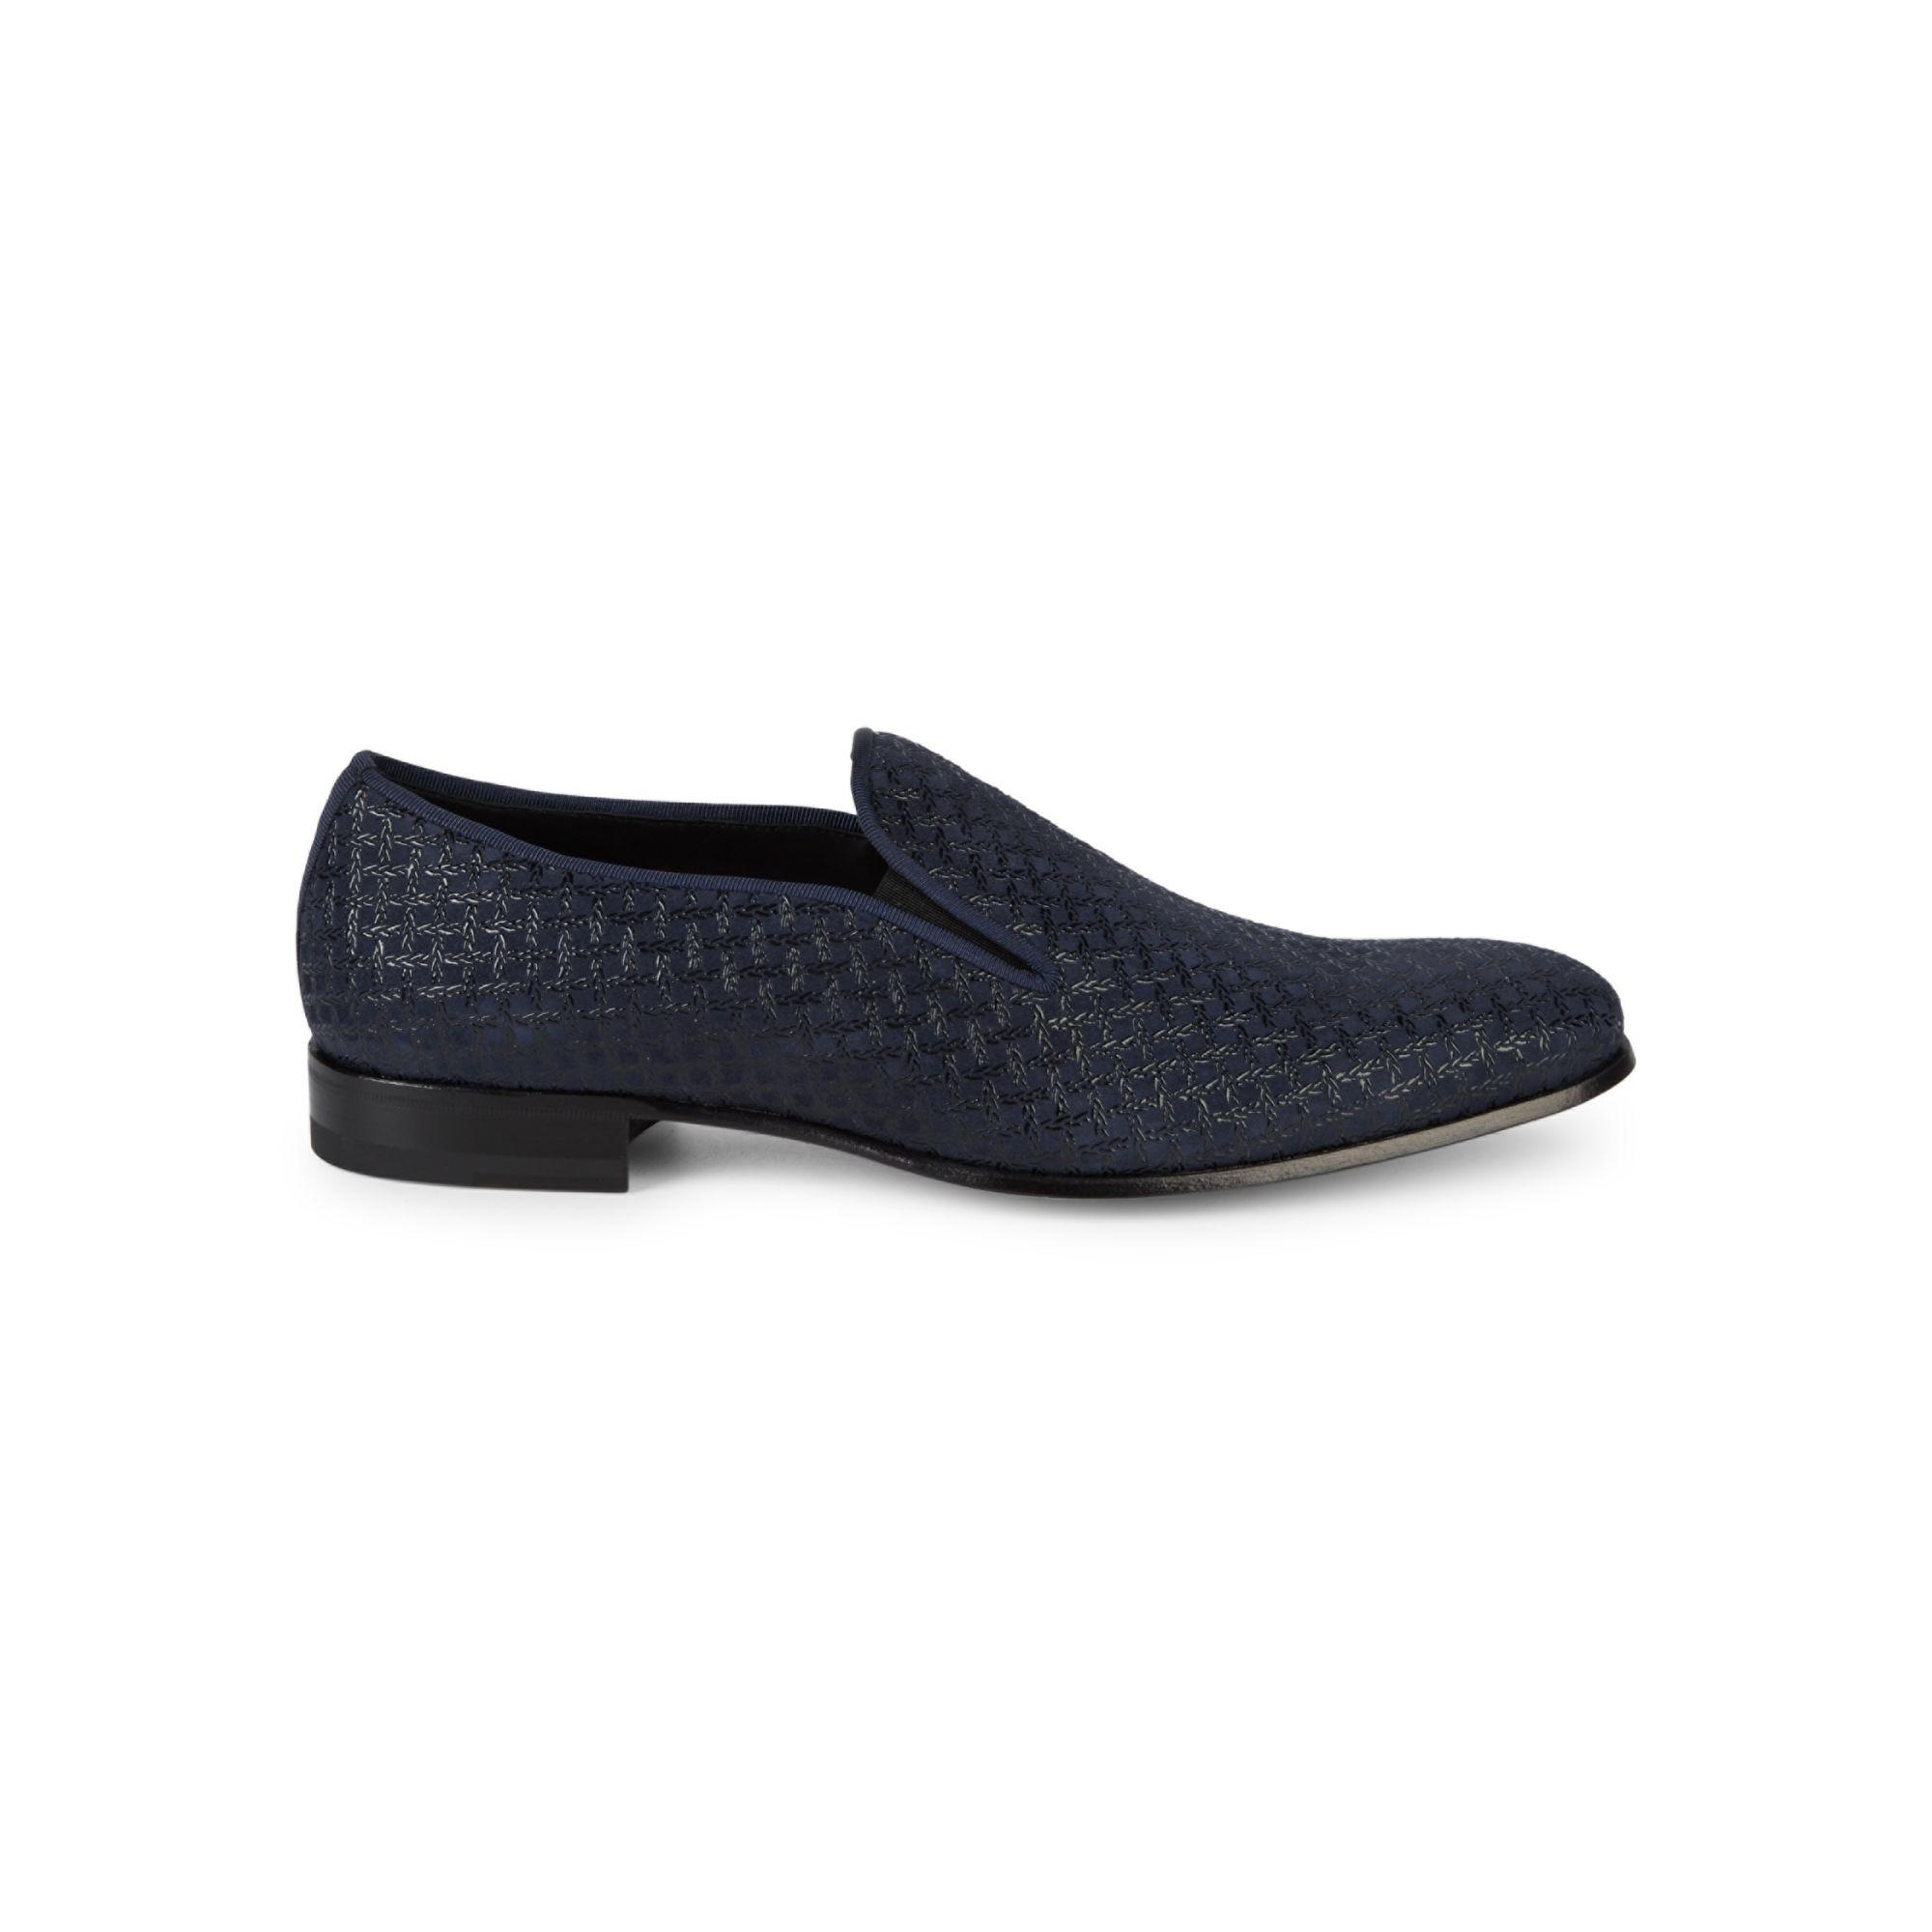 Mezlan Boheme Ii Suede & Patent Leather Loafers in Blue for Men - Lyst